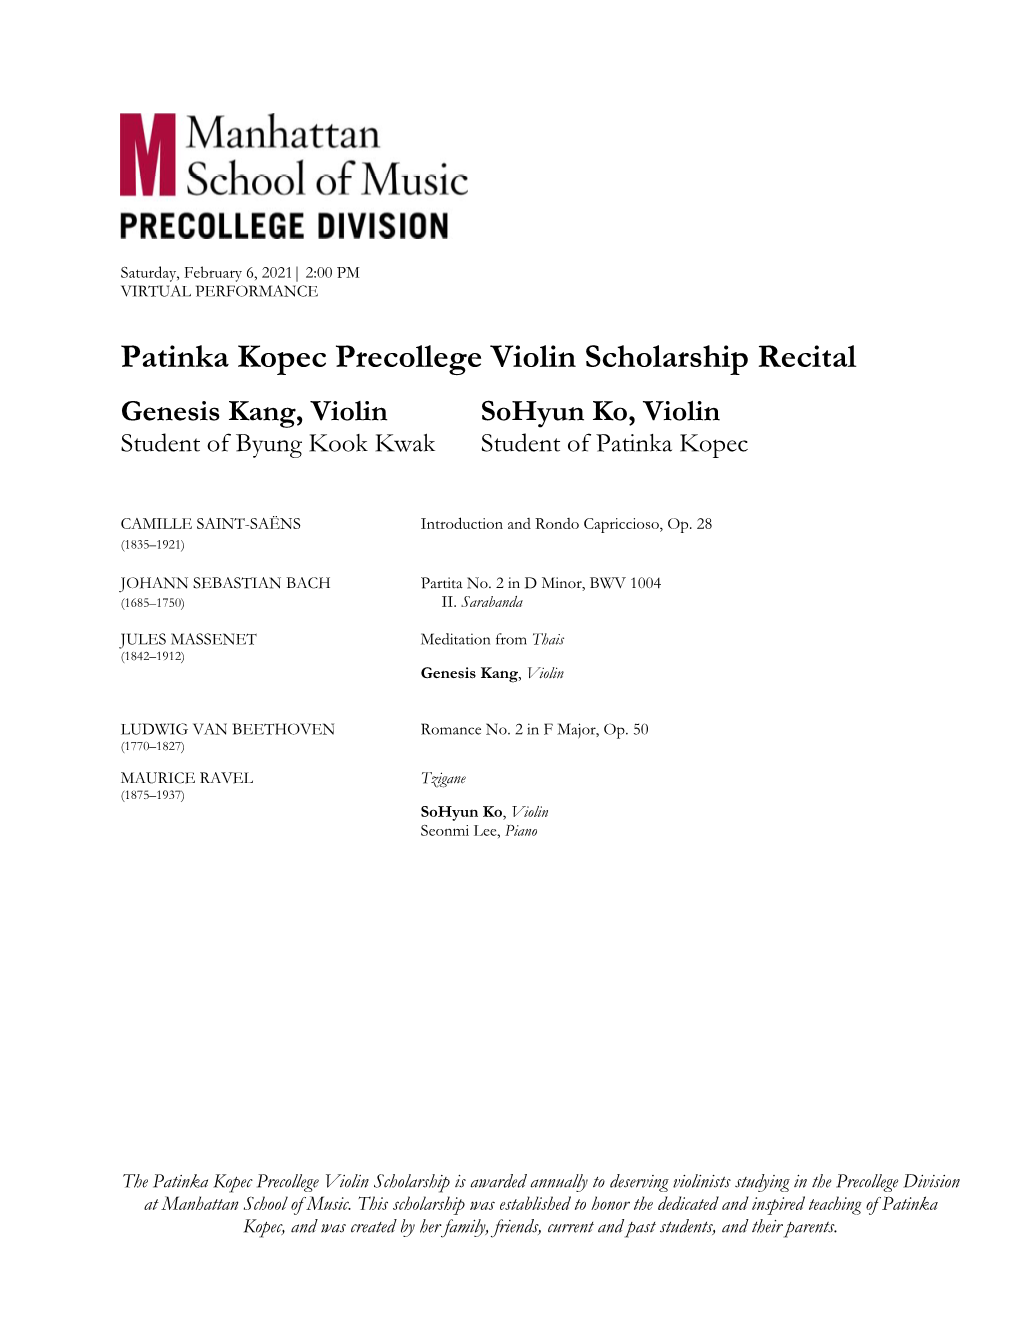 Patinka Kopec Precollege Violin Scholarship Recital